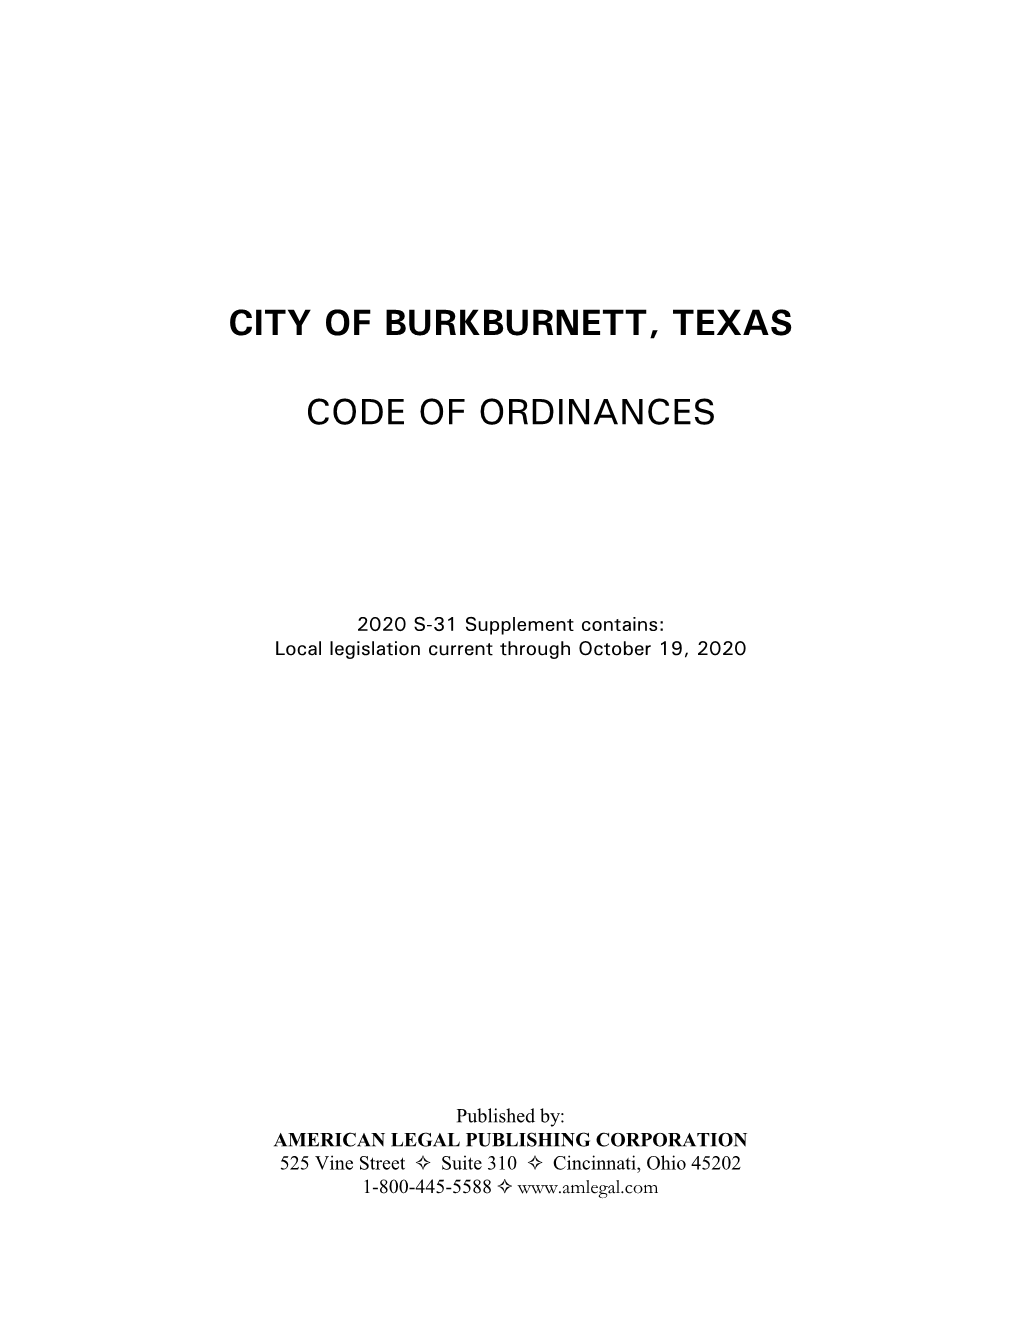 City of Burkburnett, Texas Code of Ordinances